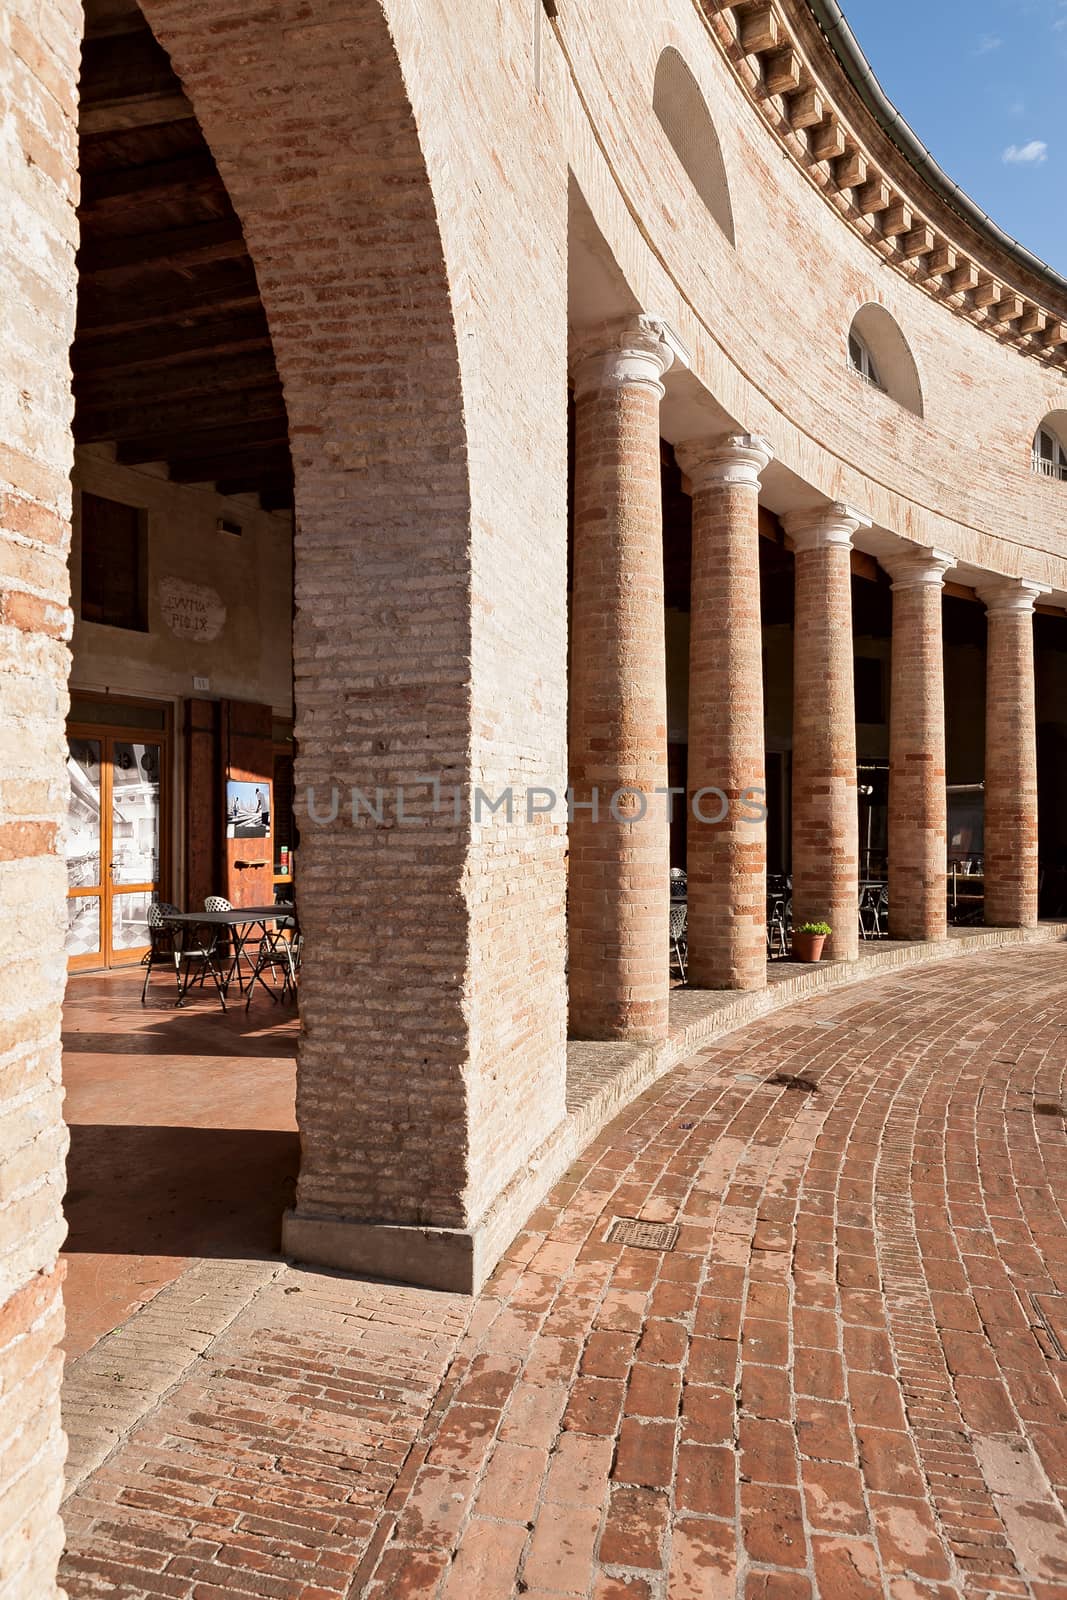 The ancient forum by LuigiMorbidelli